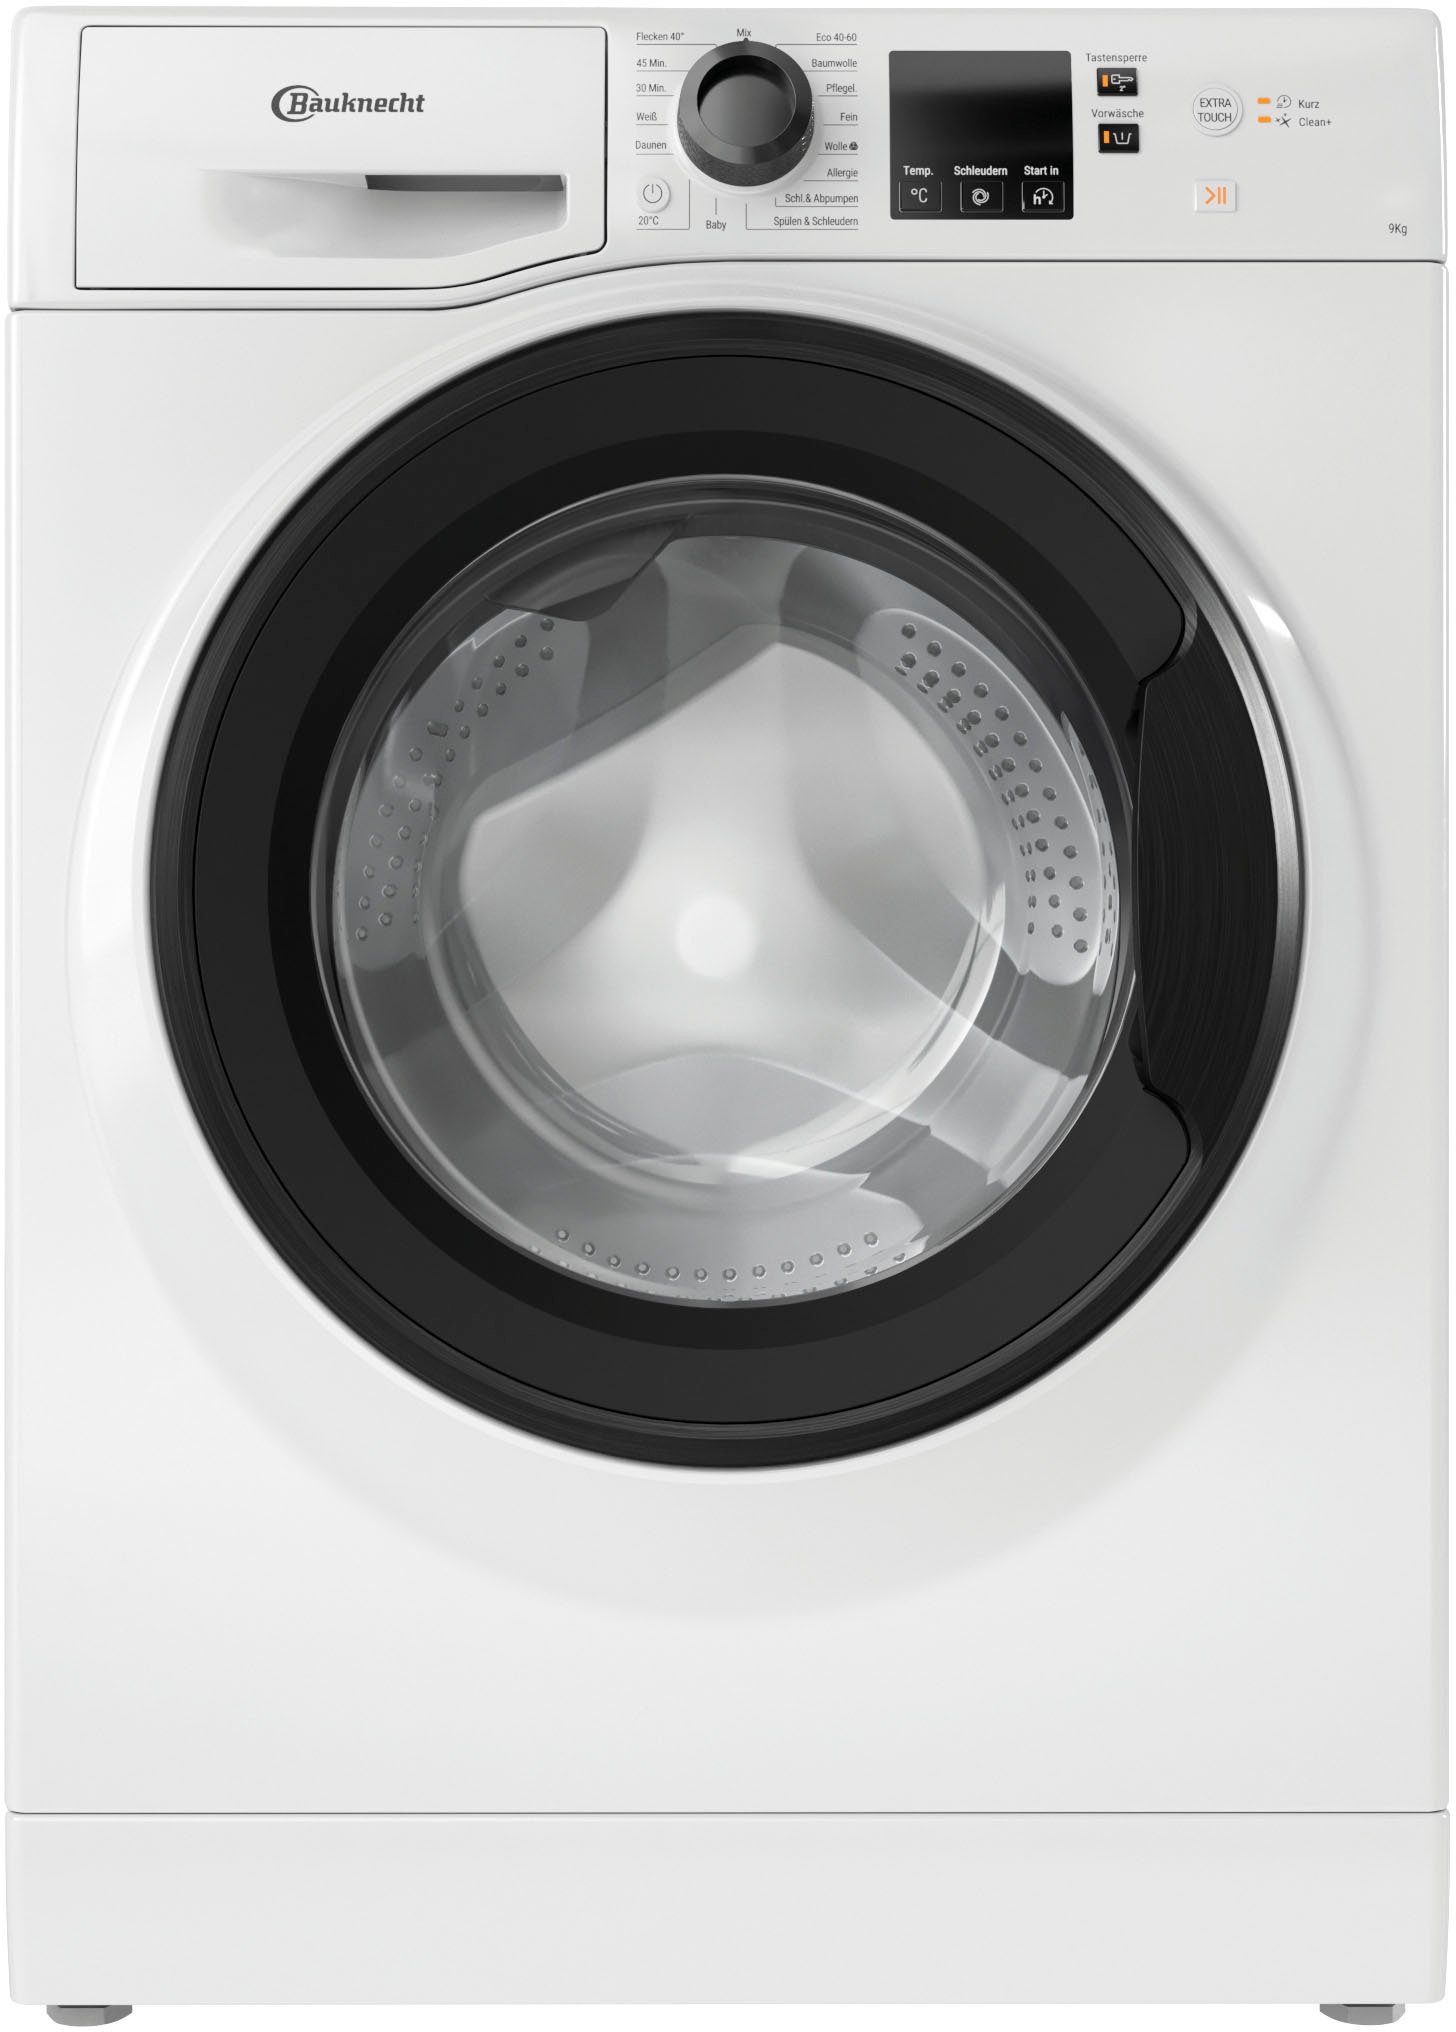 BAUKNECHT Waschmaschine BPW 914 9 B, kg, U/min 1400